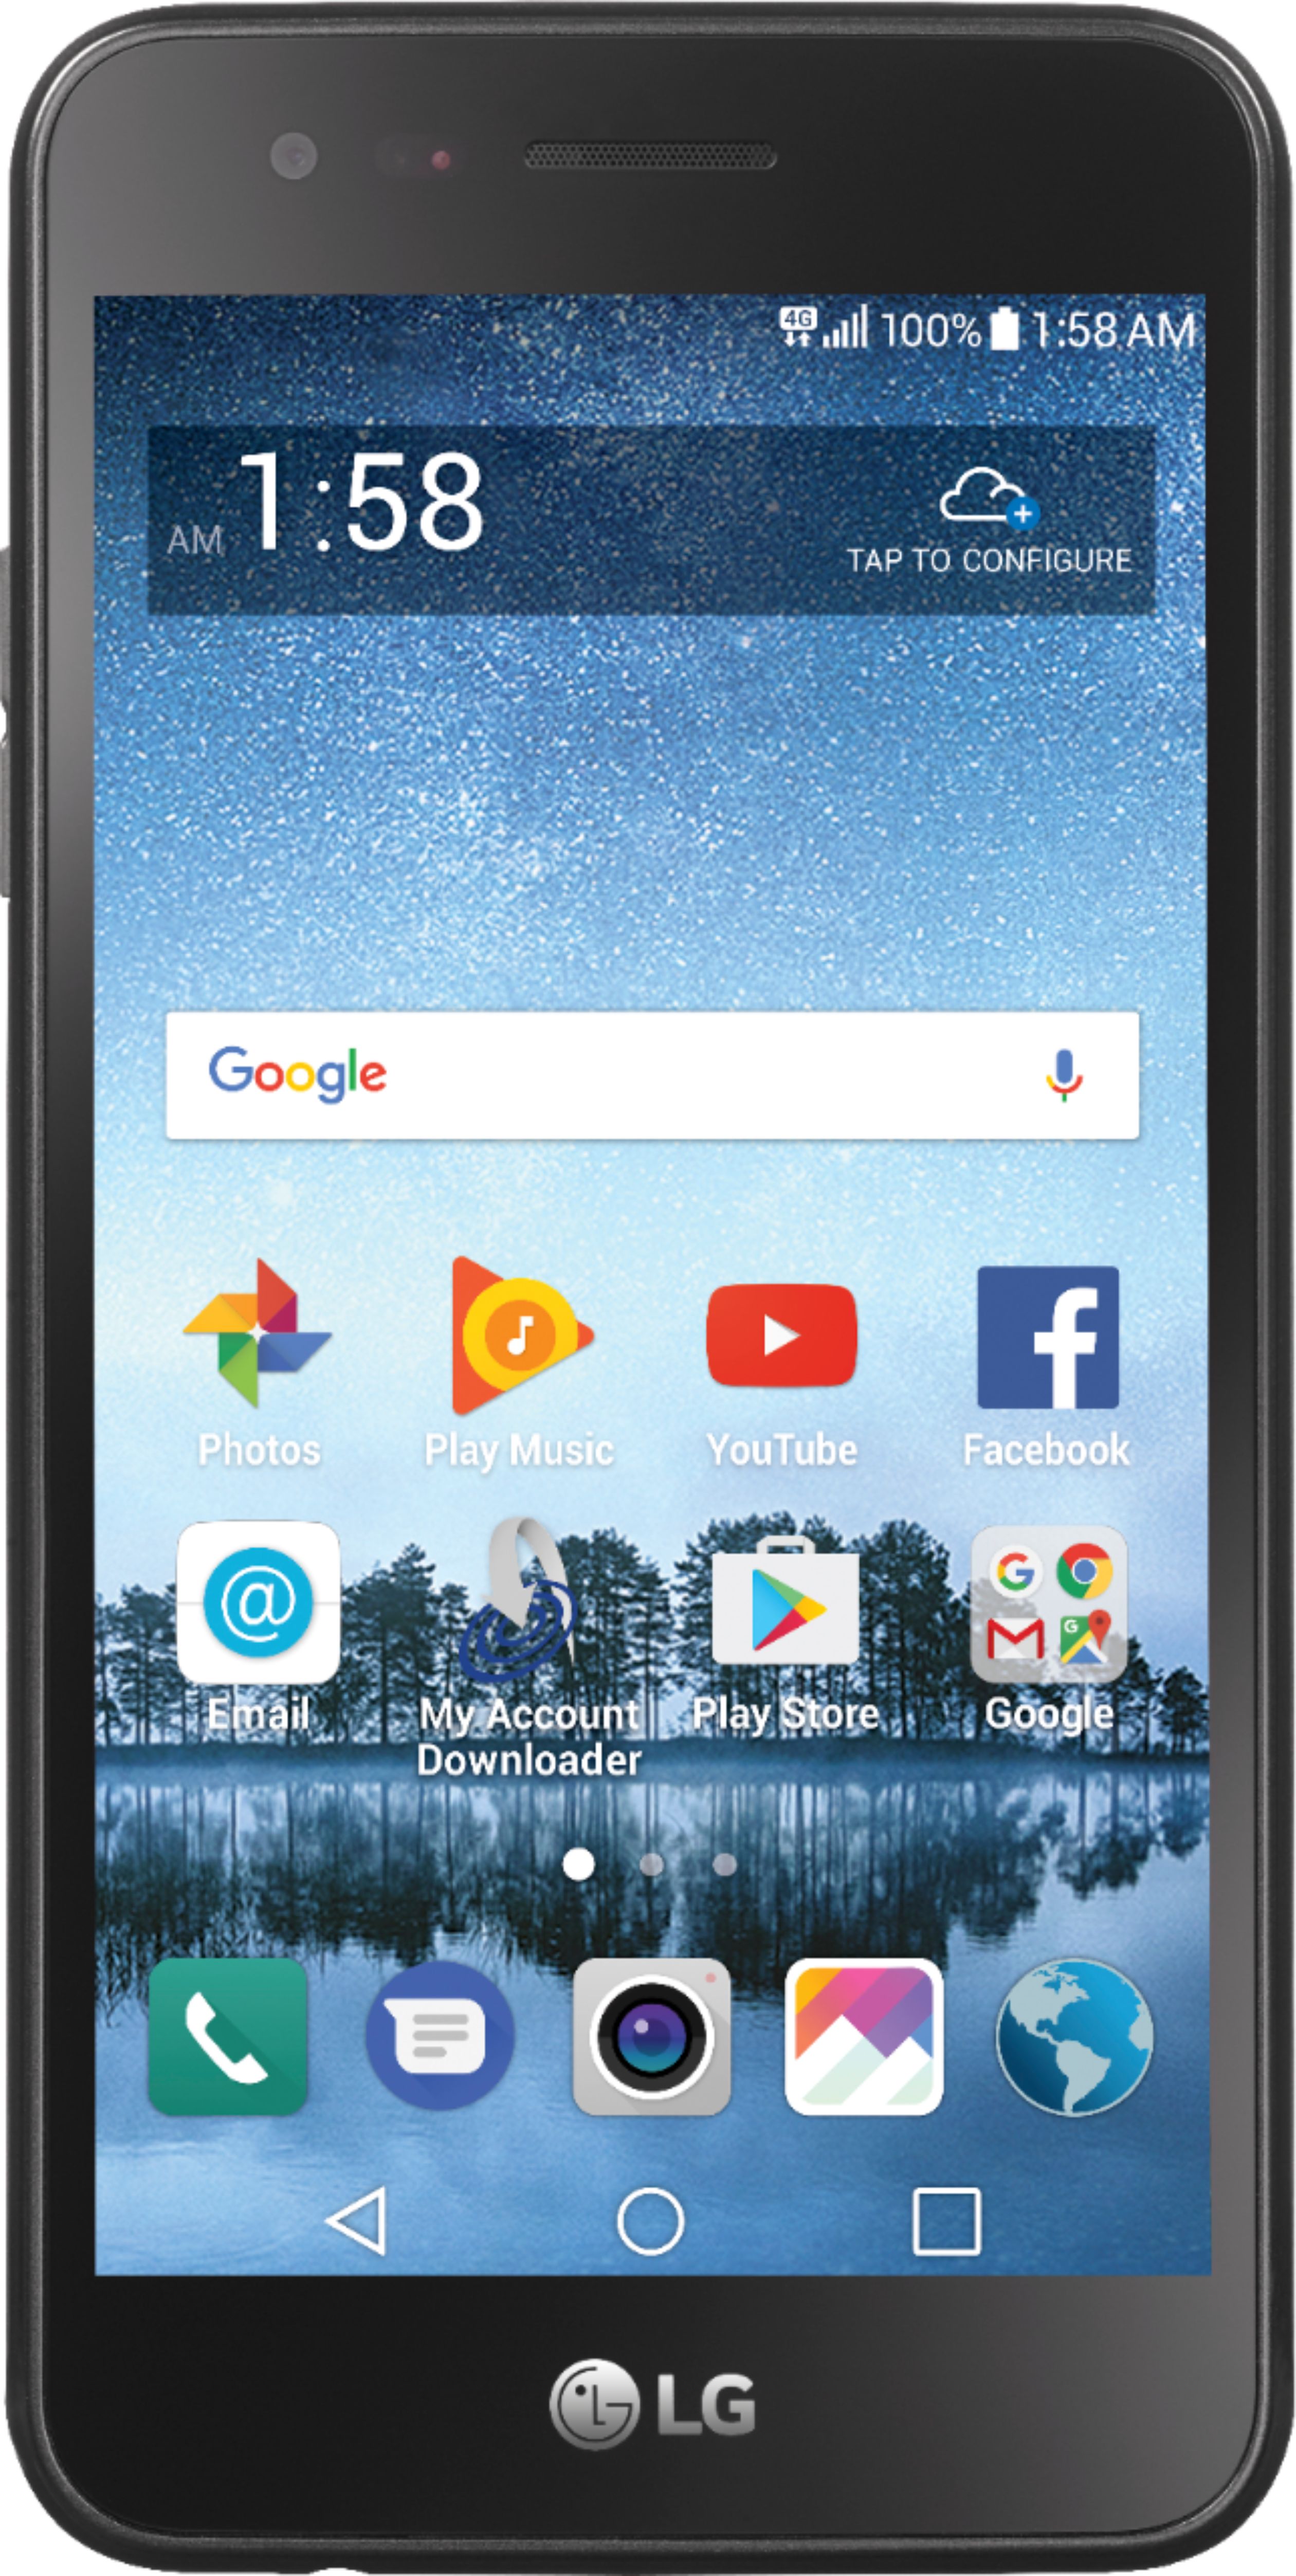 LG Rebel 3 LTE L158vl Black Tracfone Prepaid 16 for sale online